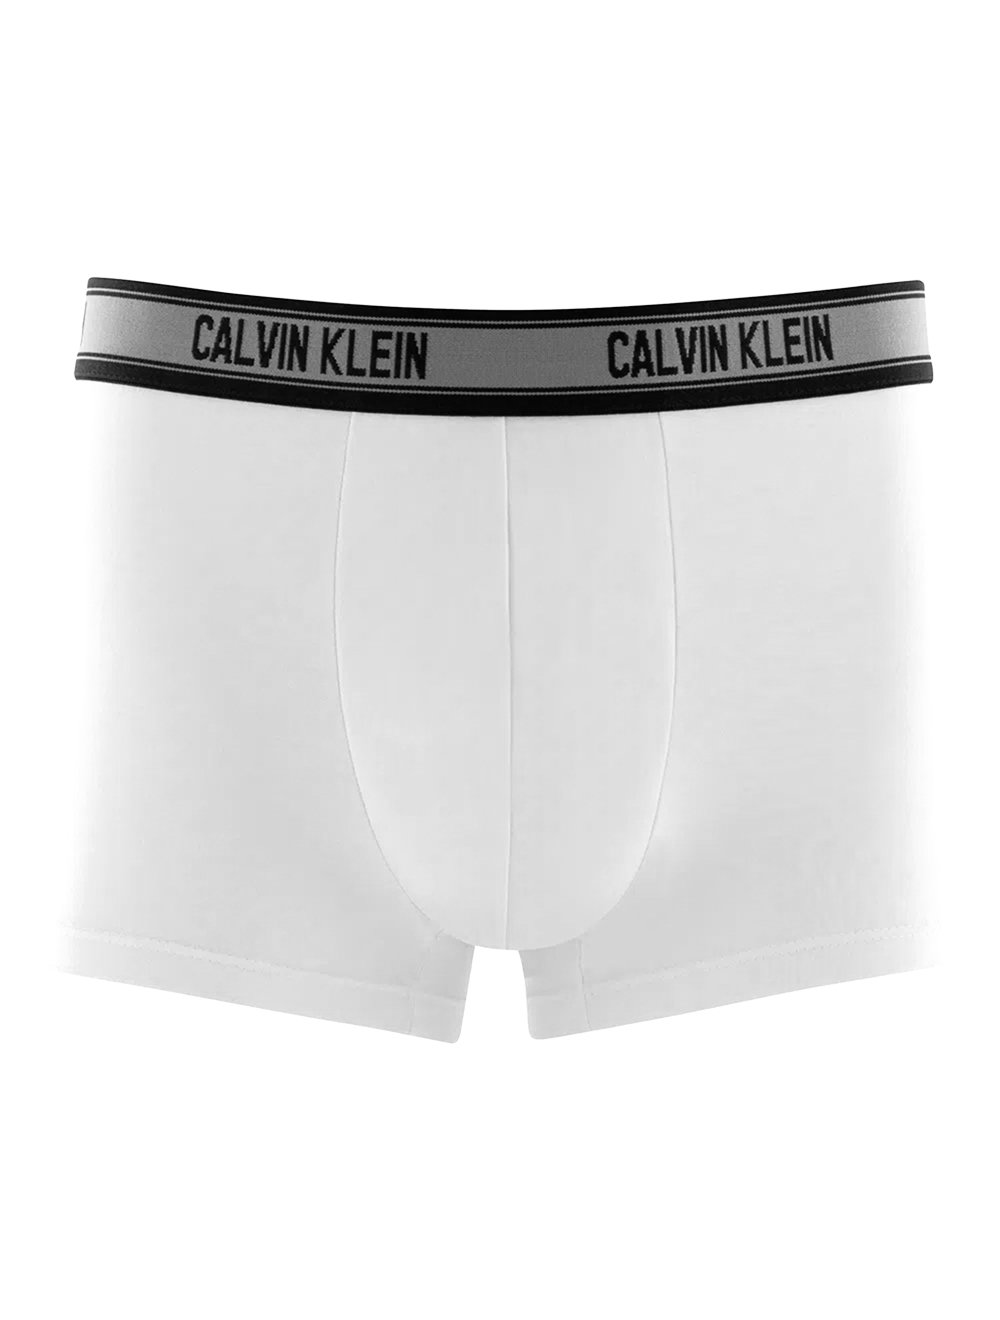 Cueca Calvin Klein Modal Trunk C10.10 BR00 Grey Stripe Branca 1UN